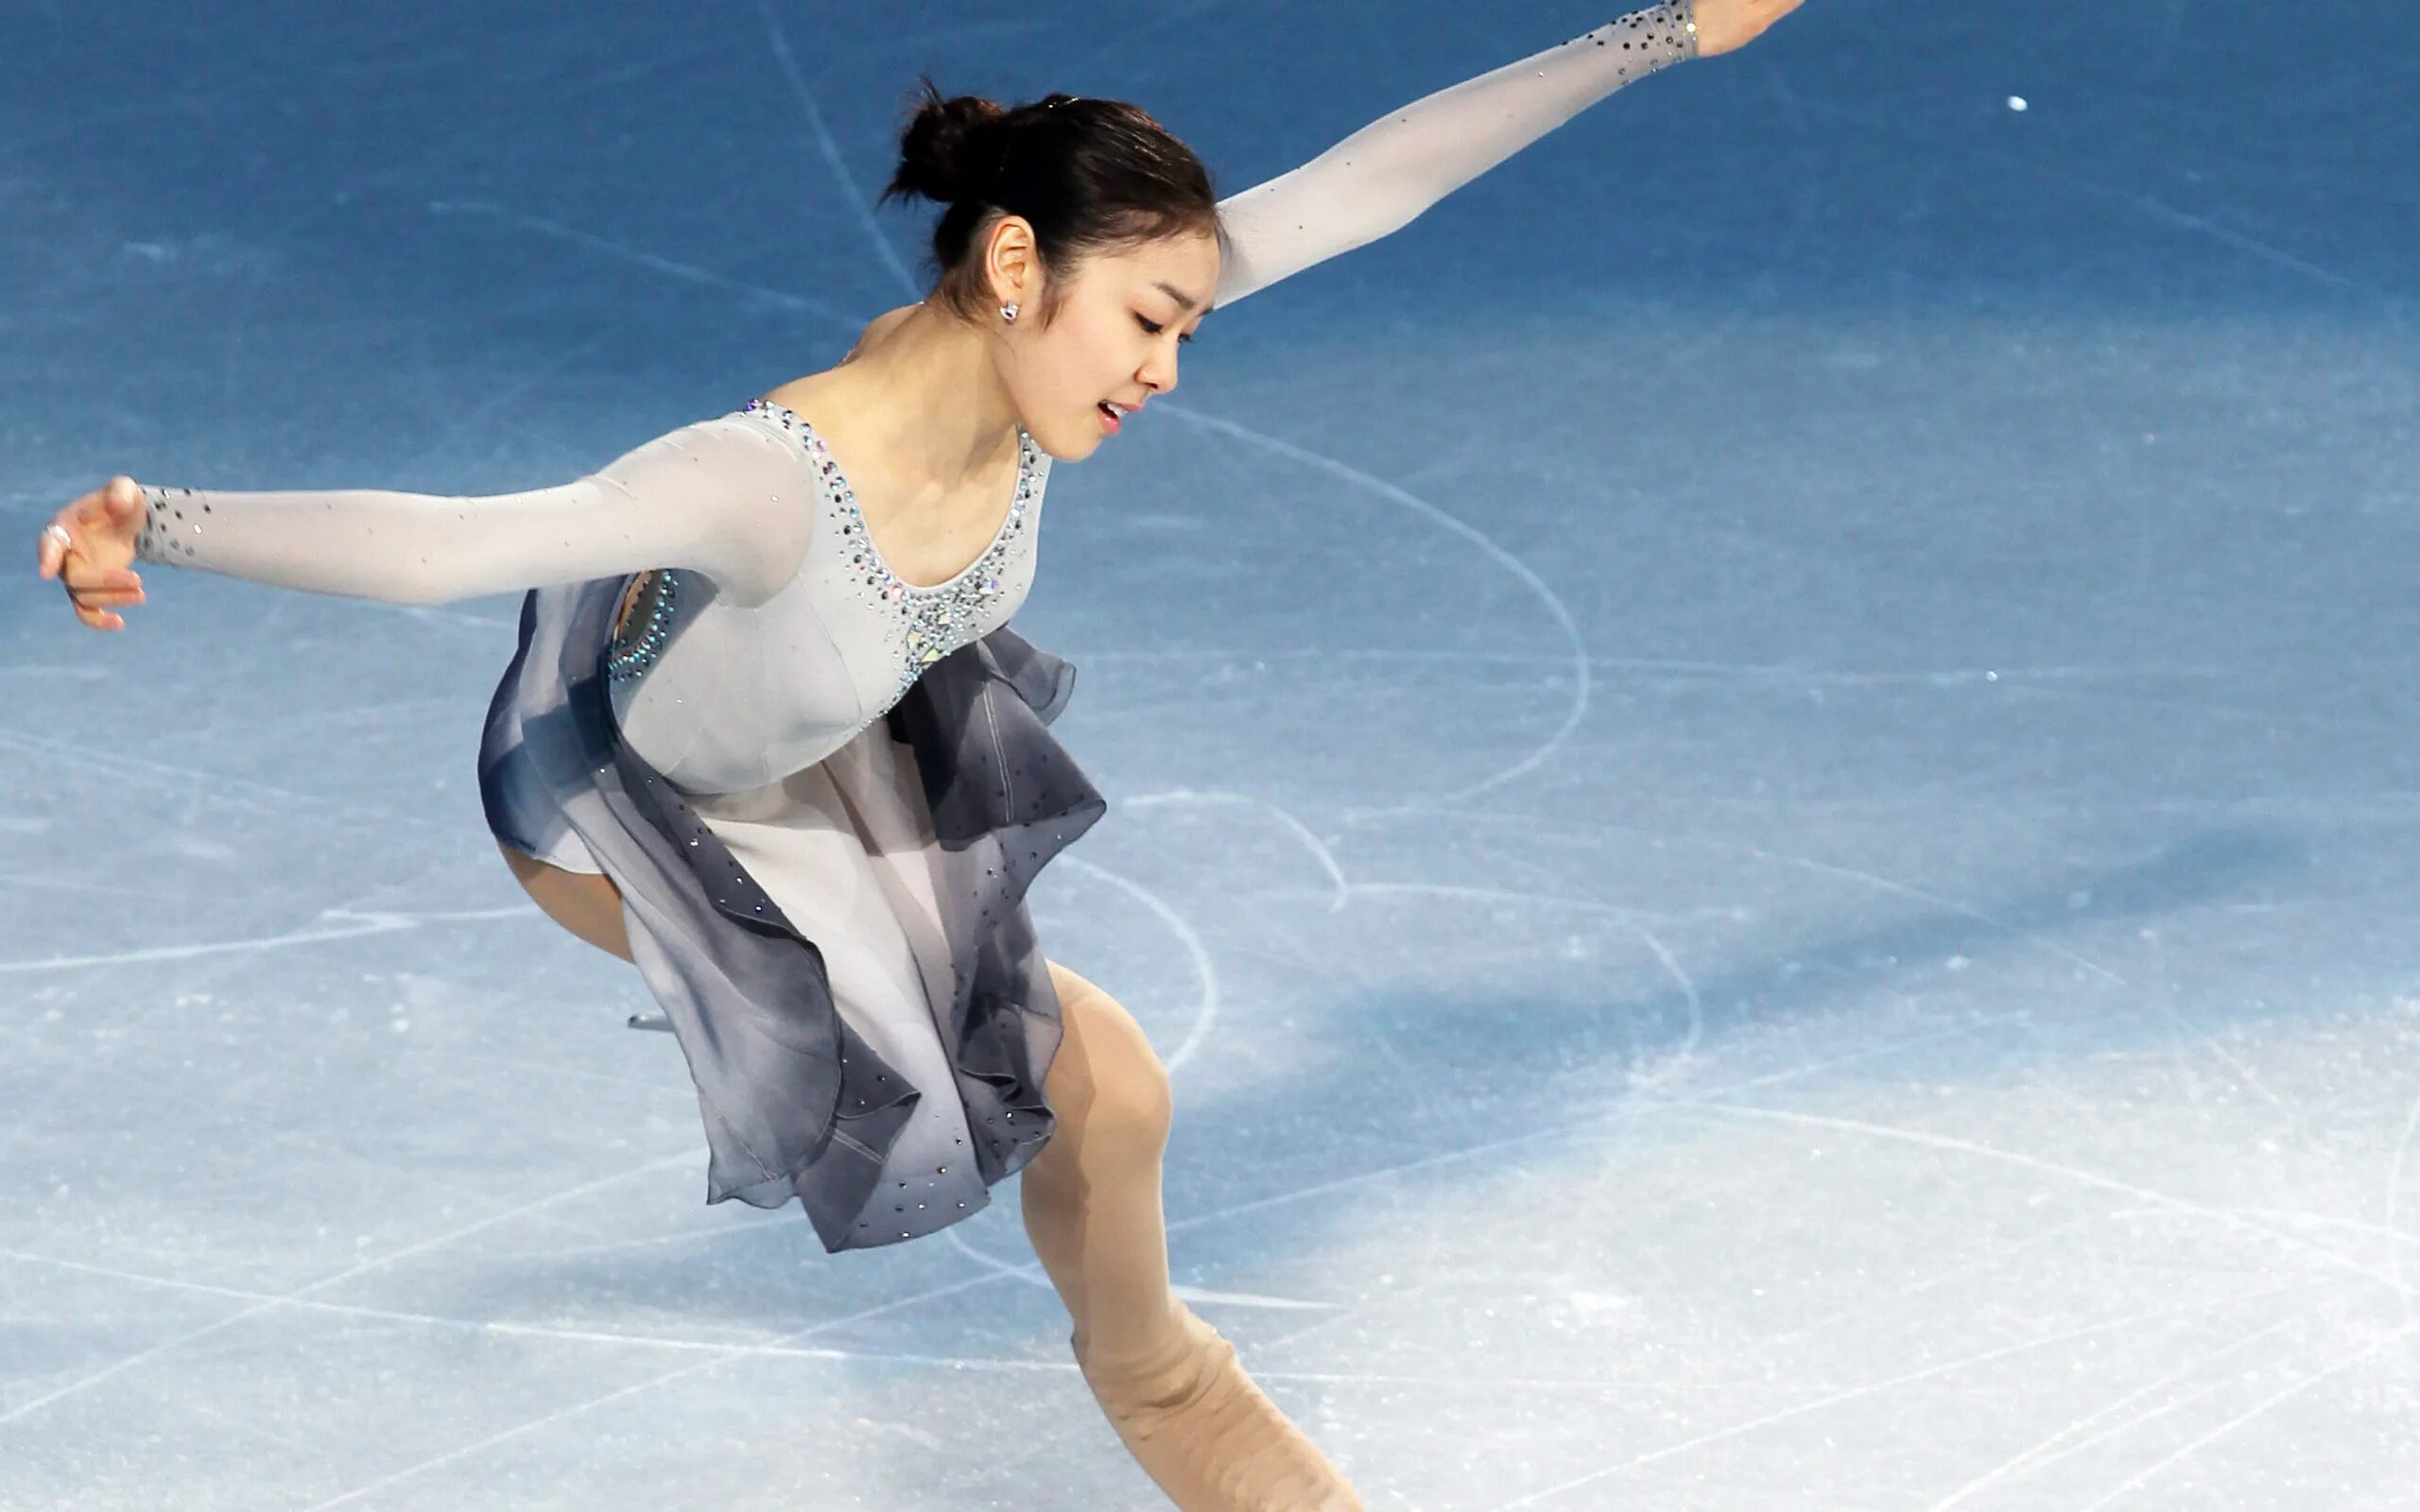 Yuna Kim. Figure Skating фигурное катание. She likes skating